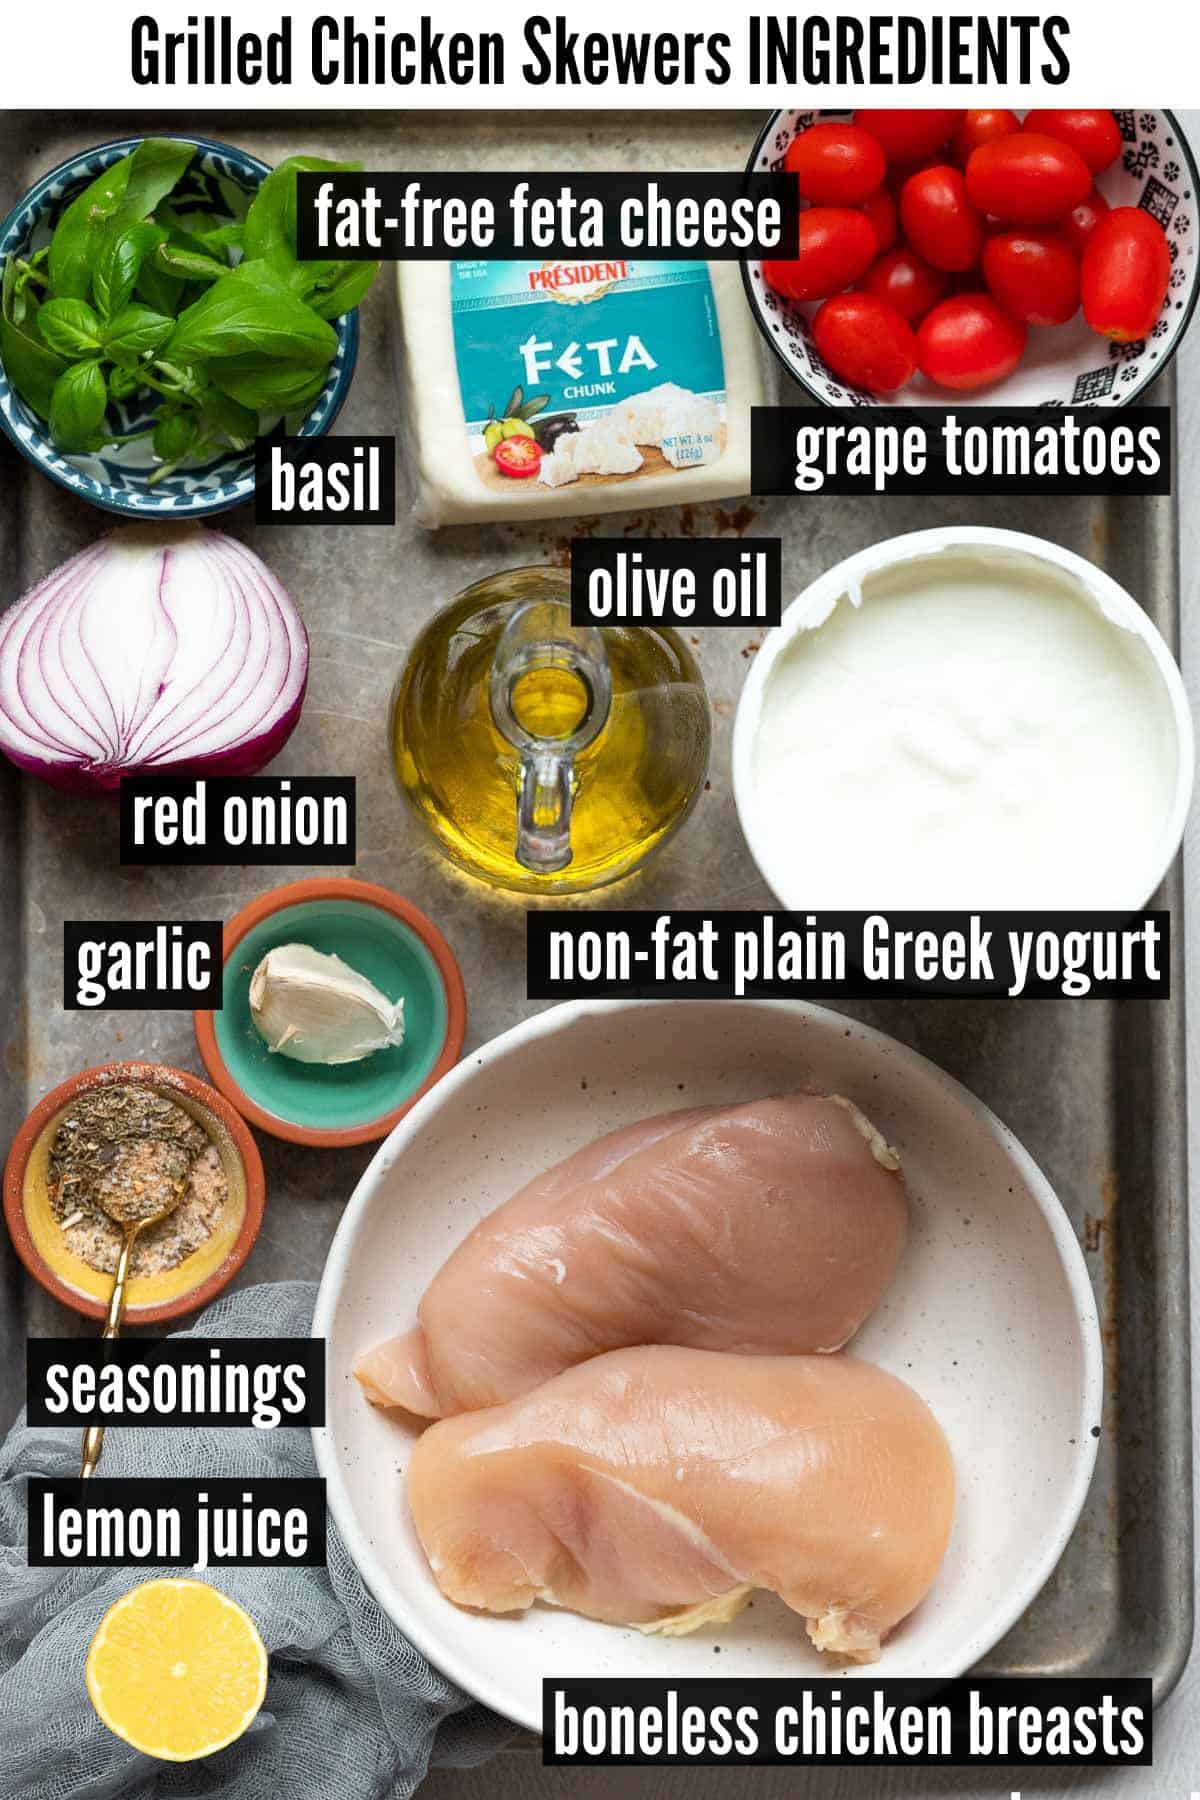 grilled chicken skewers labelled ingredients.